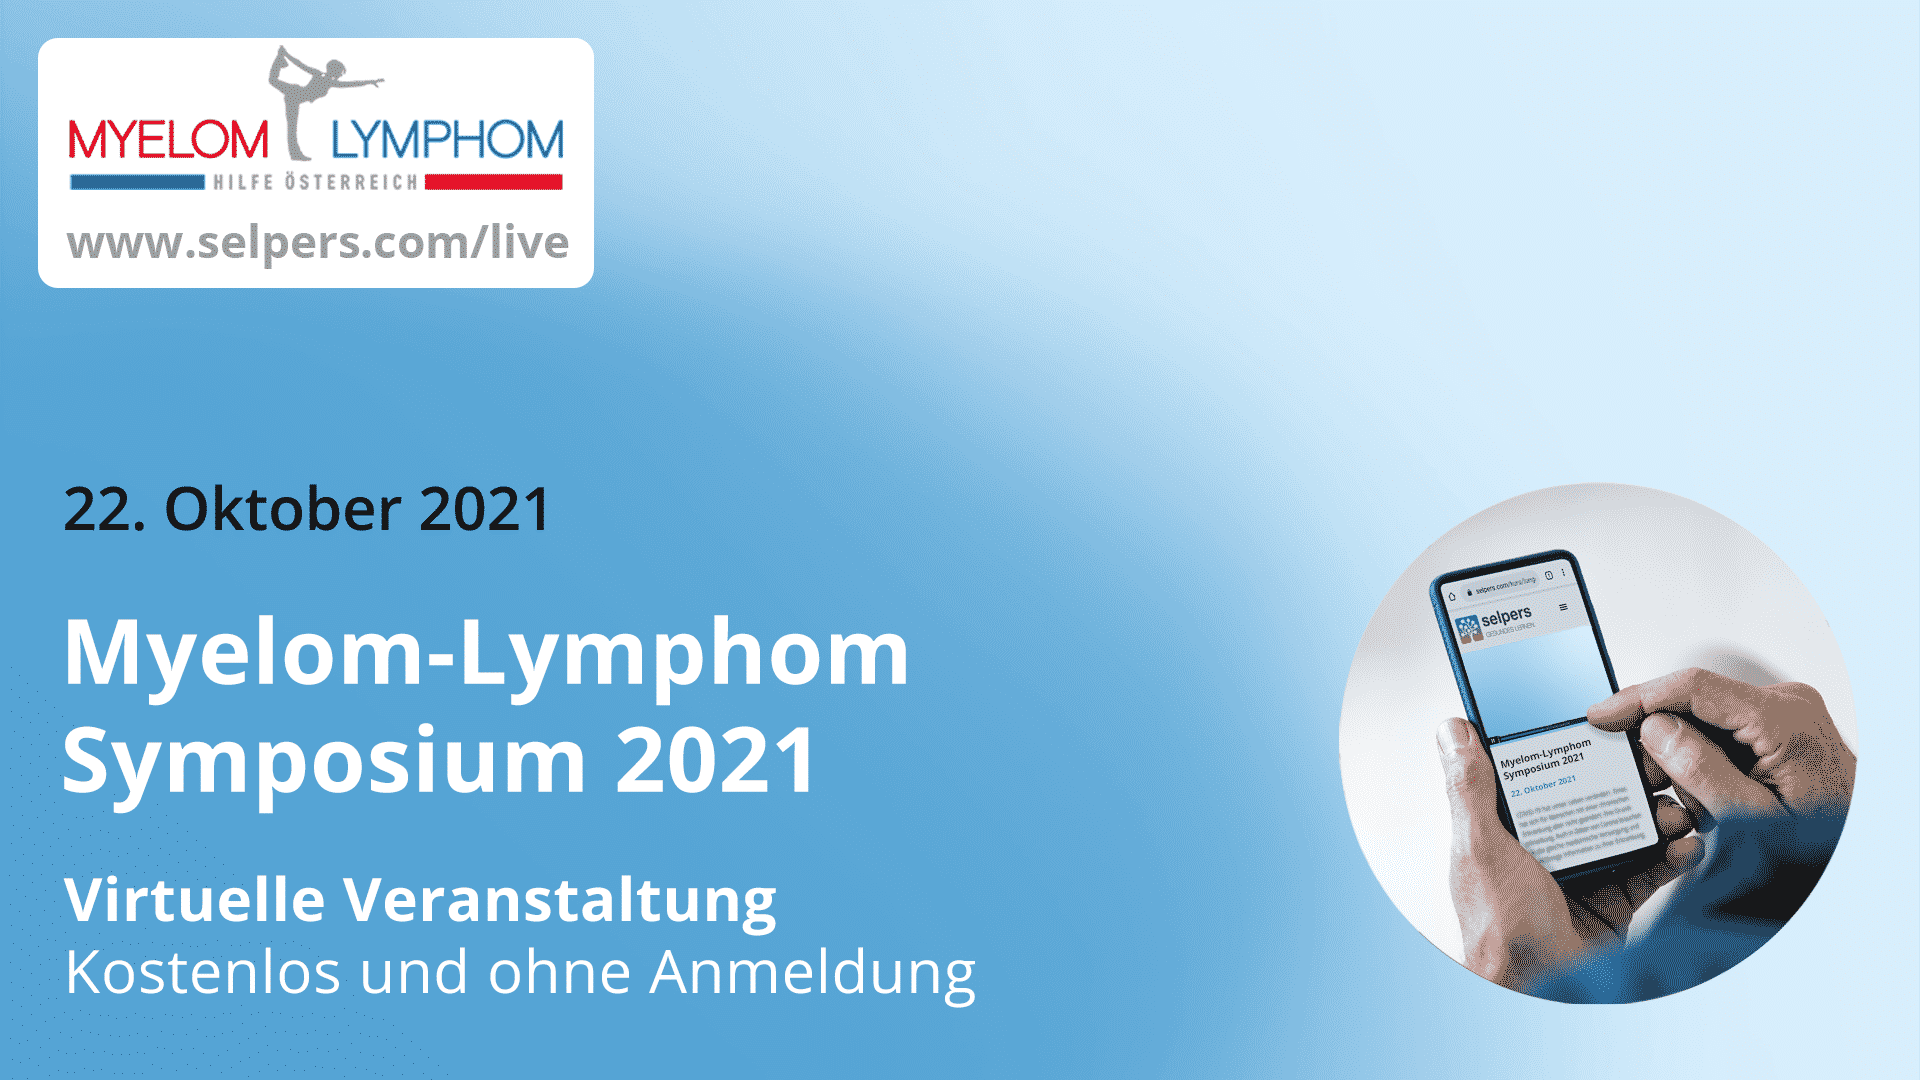 Myelom-Lymphom Symposium 2021